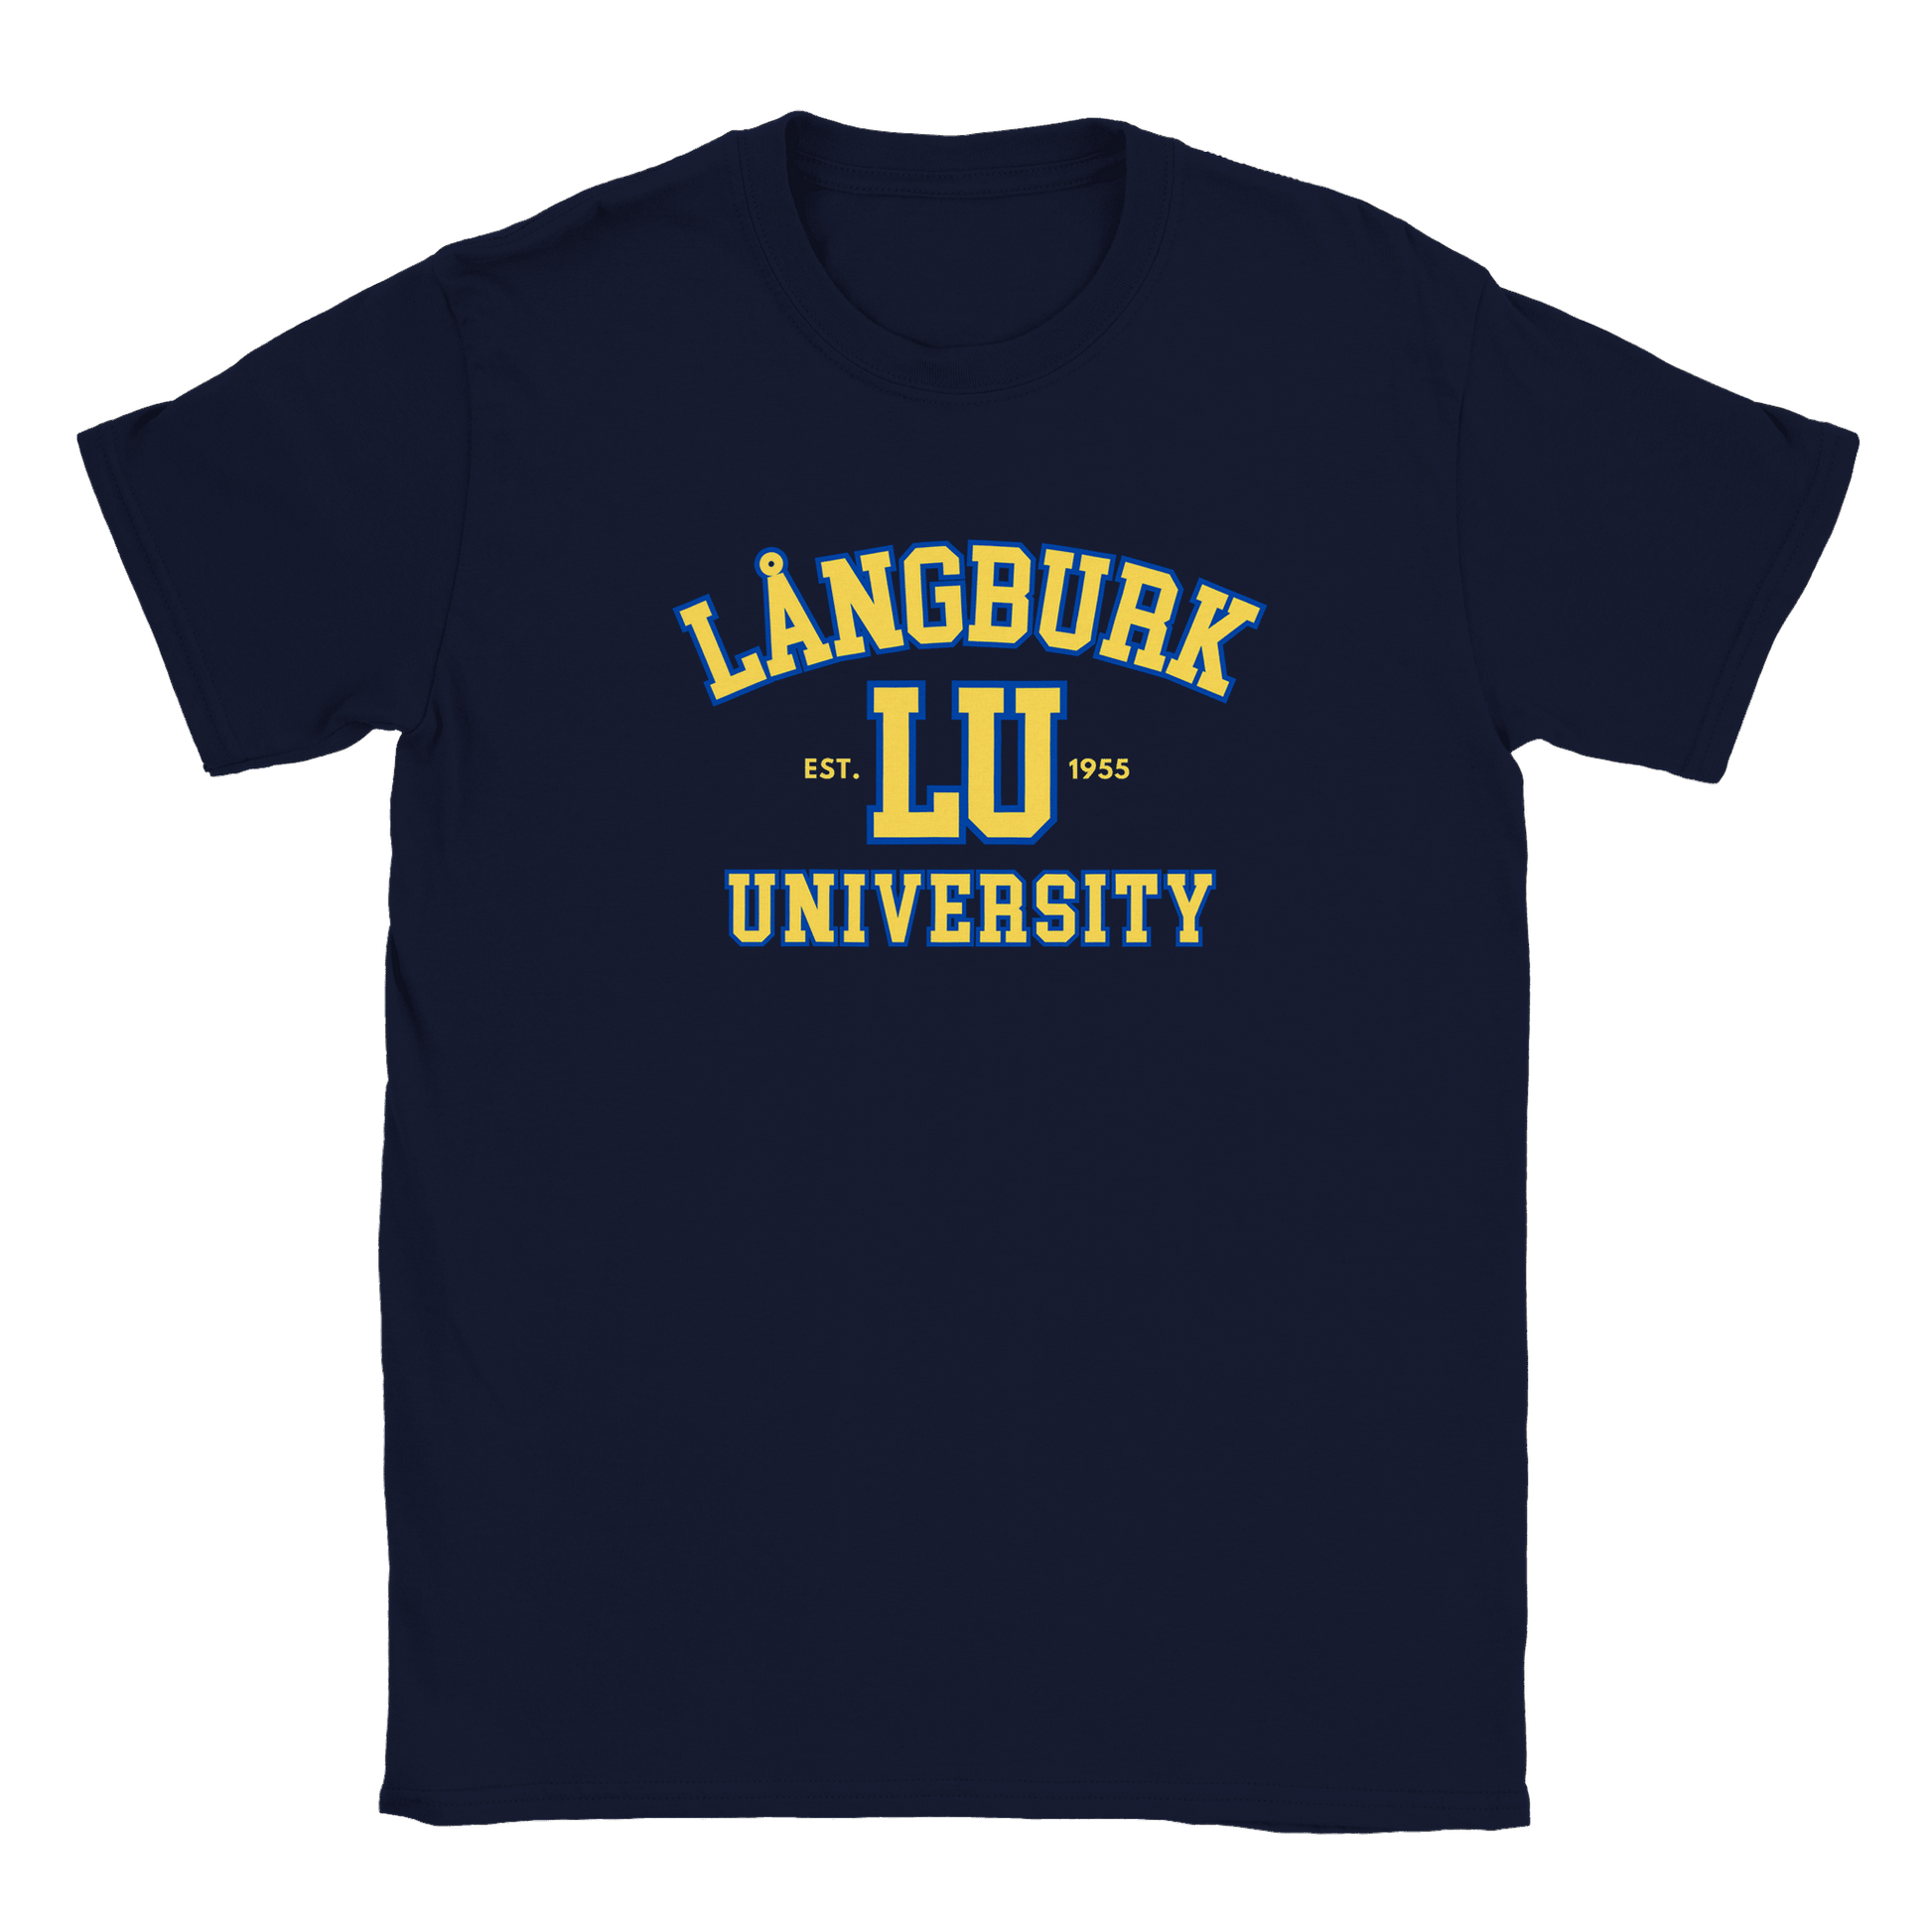 Långburk University - T-shirt Navy